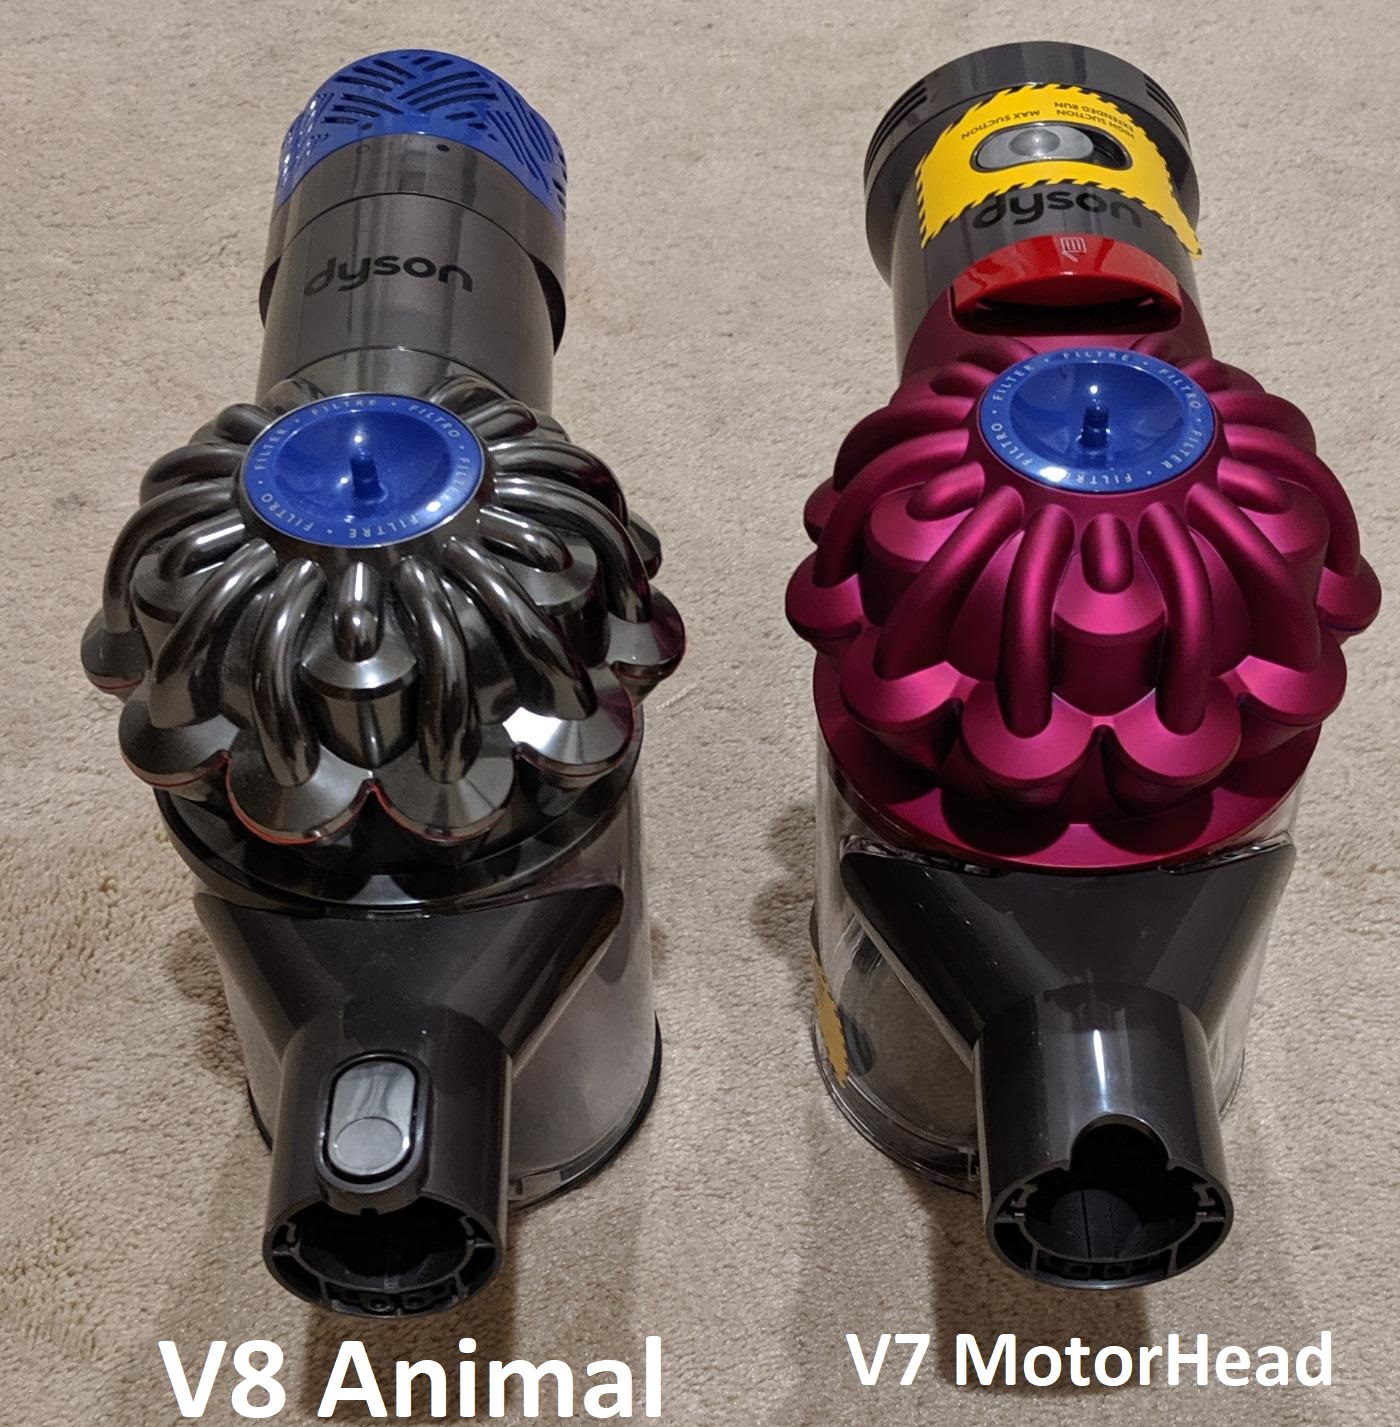 Dyson V7 Motorhead Vs V8 Animal : choisissez la meilleure option – Dyson Guide